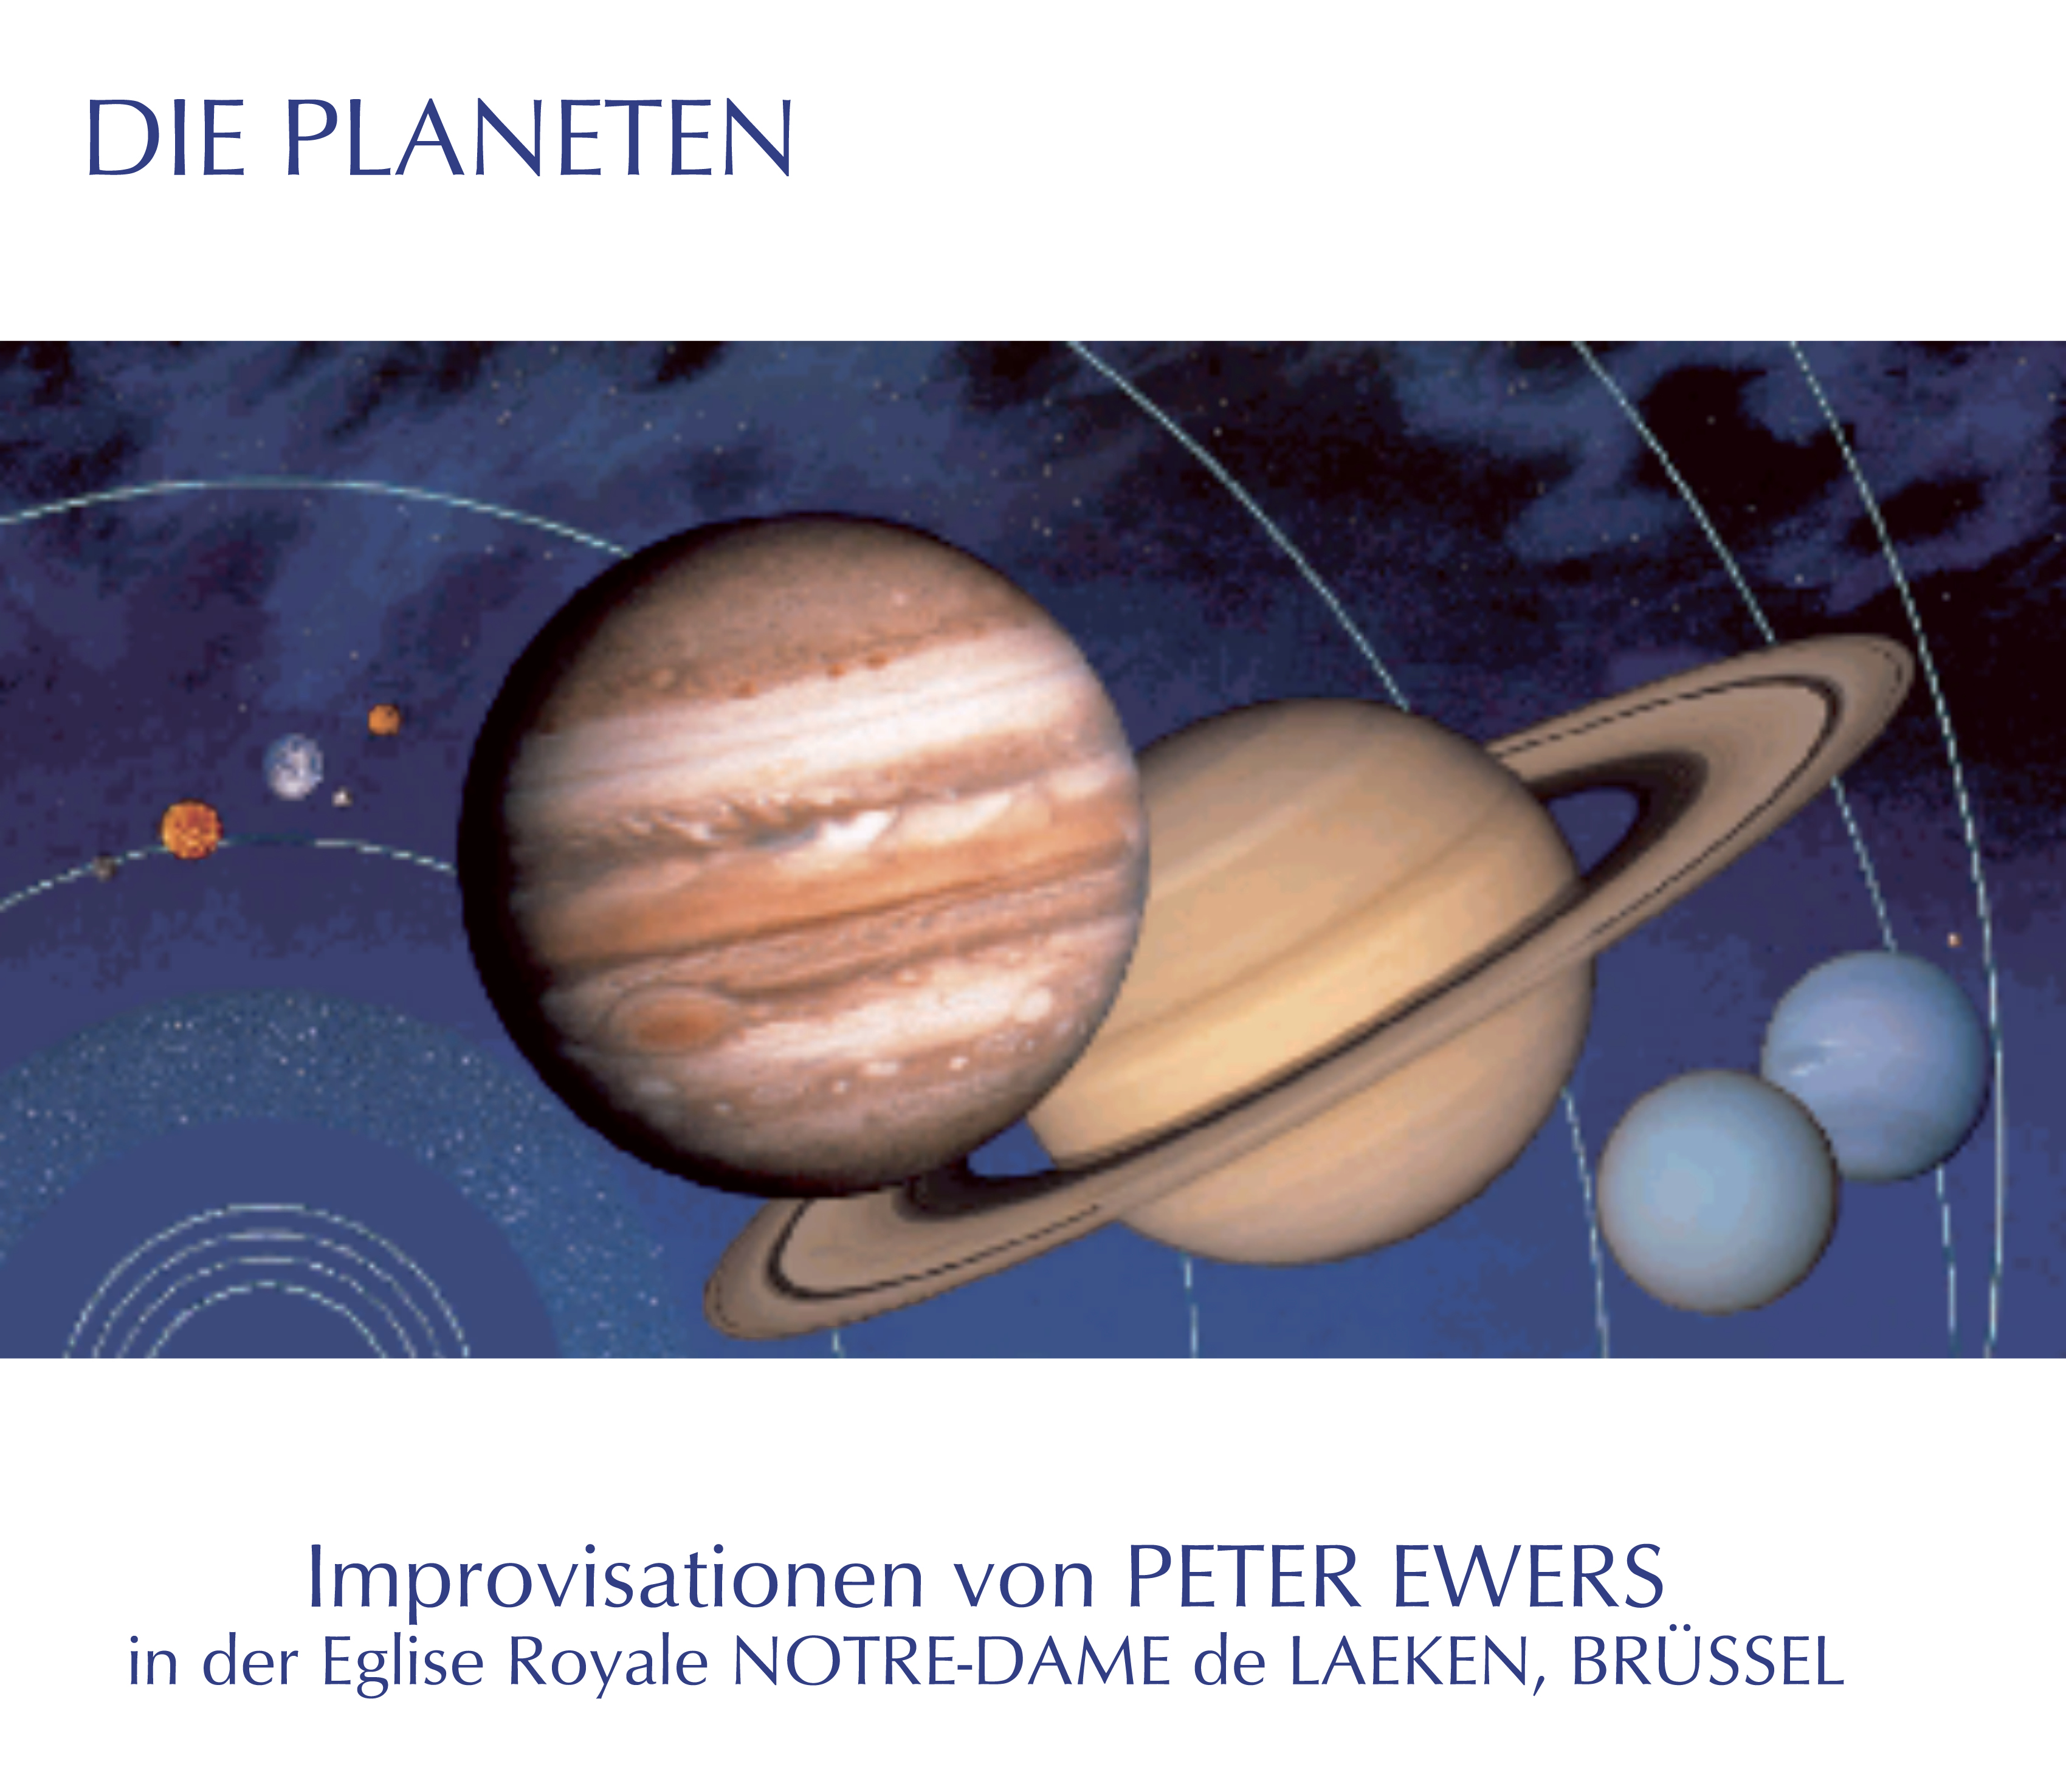 Die Planeten: Peter Ewers spielt in Notre-Dame de Laeken, Brüssel